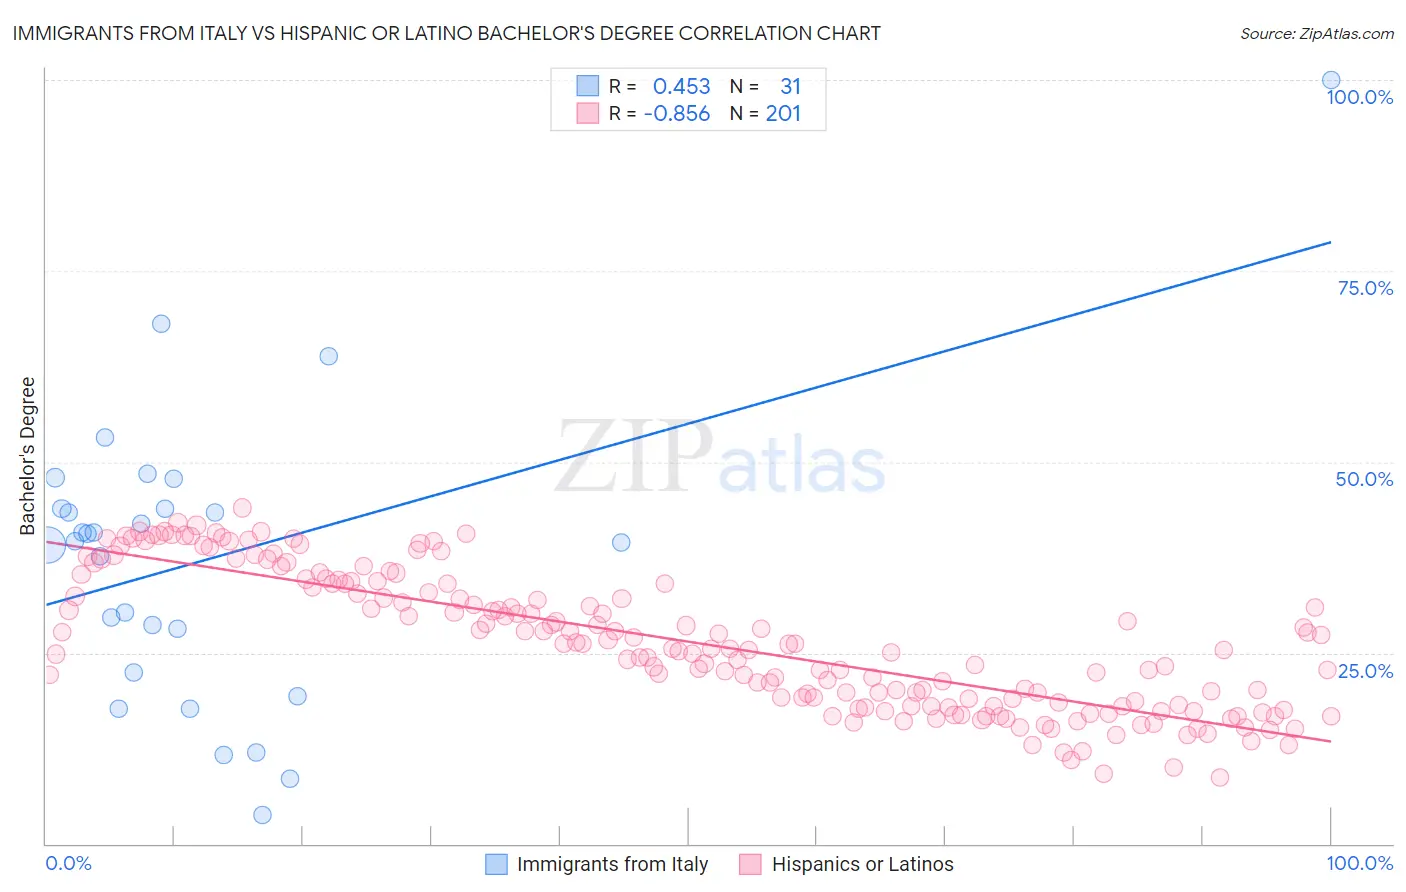 Immigrants from Italy vs Hispanic or Latino Bachelor's Degree